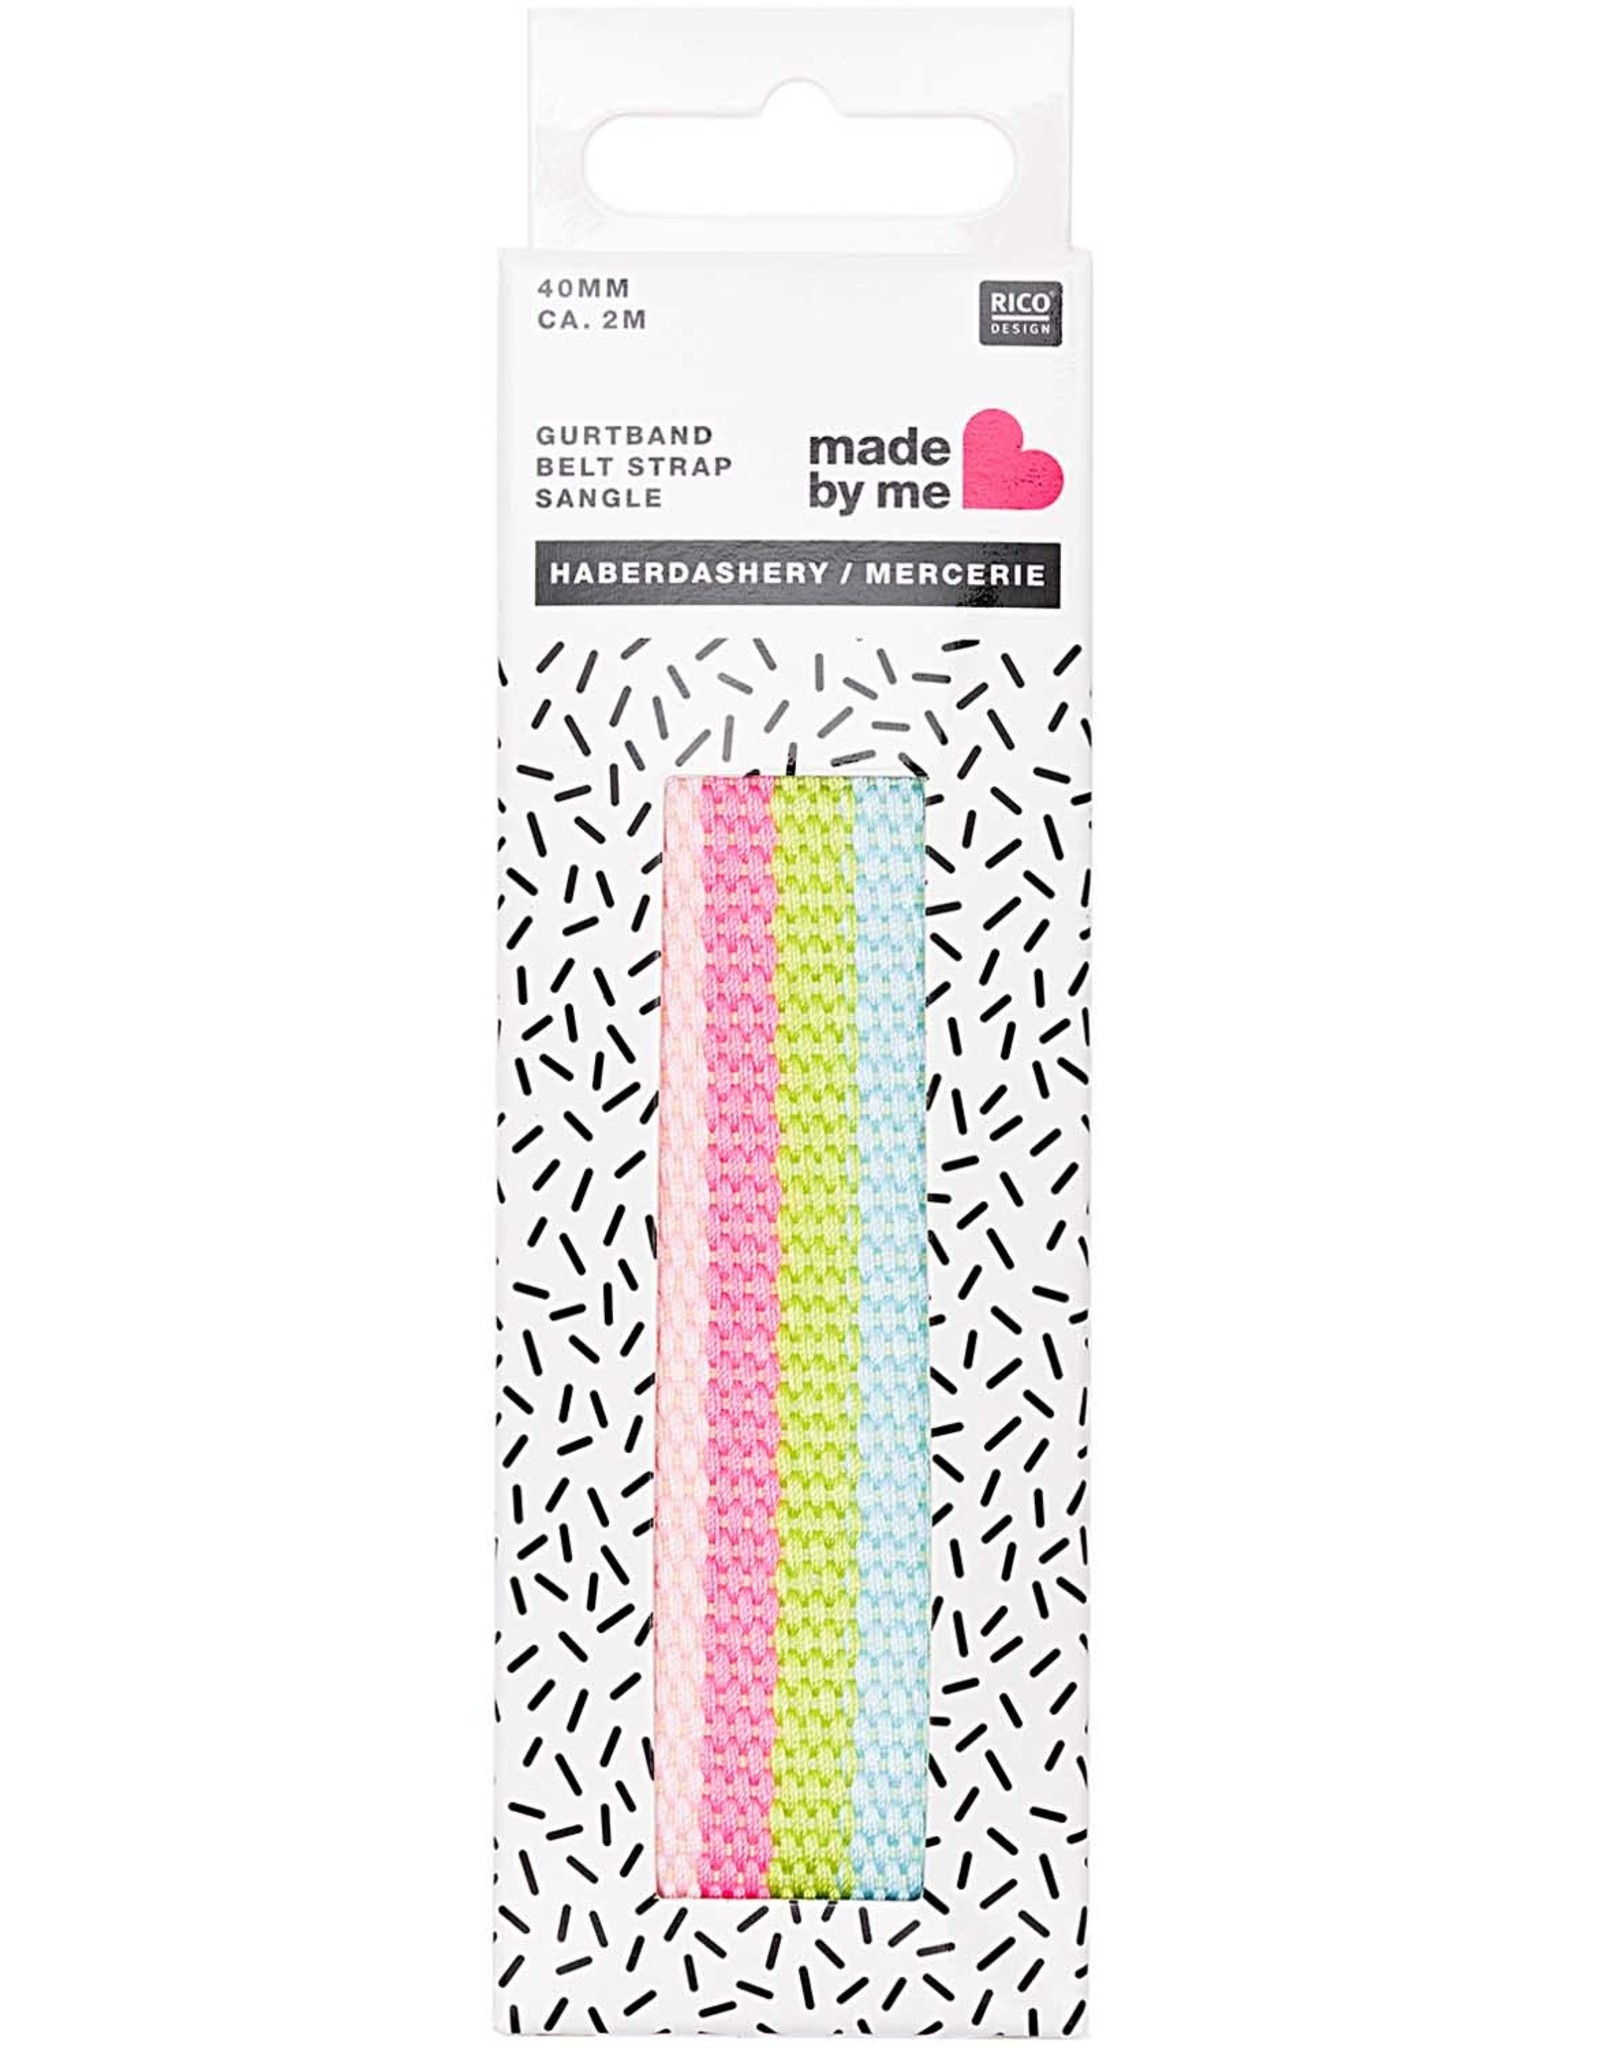 Rico Design Tassenband pastel gestreept 40mm x2m